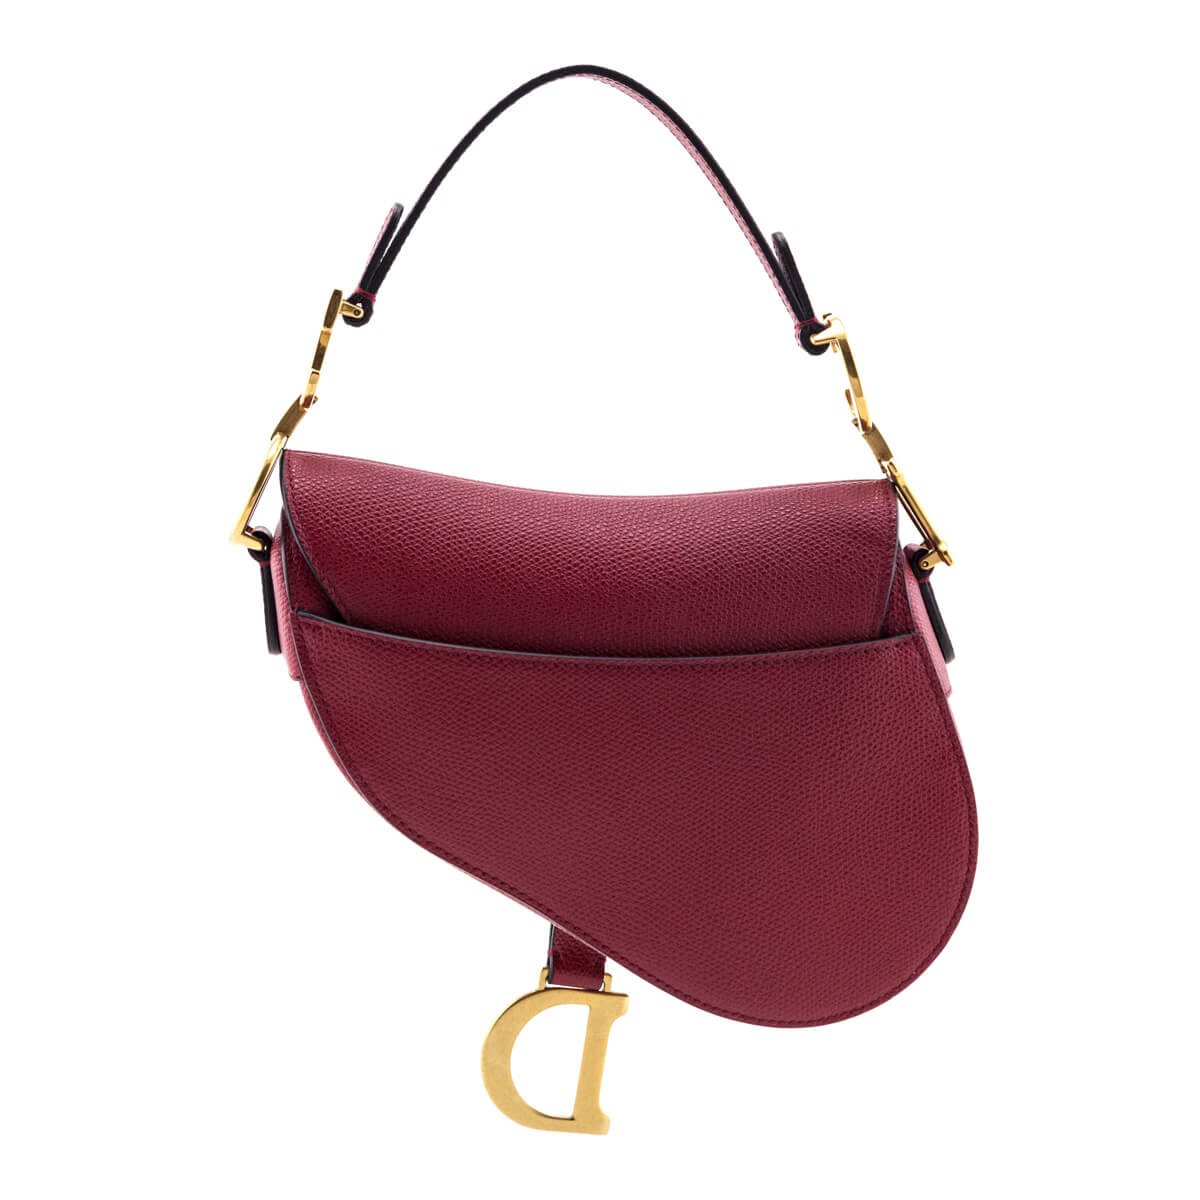 Designer purse red color